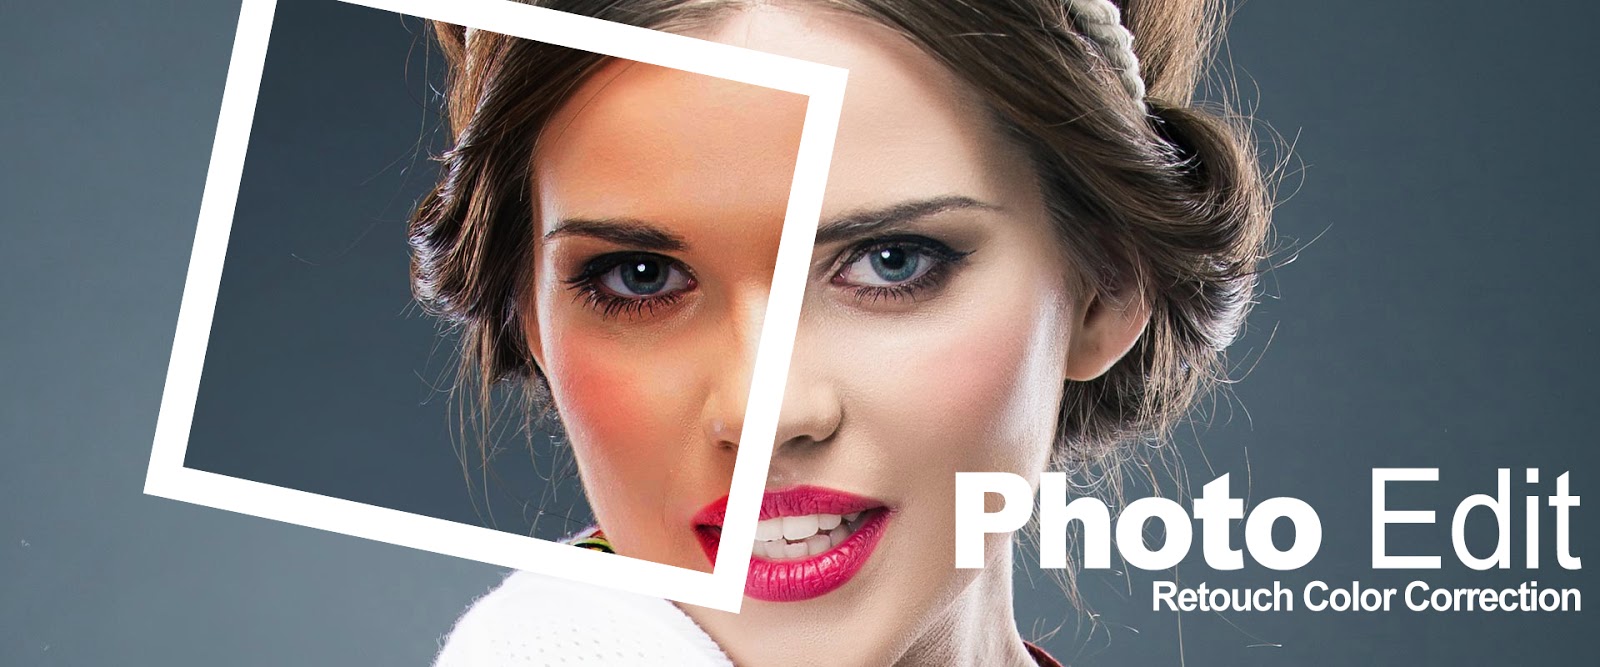 30 Most Useful Free Photo And Image Editors: Photoshop Alternatives